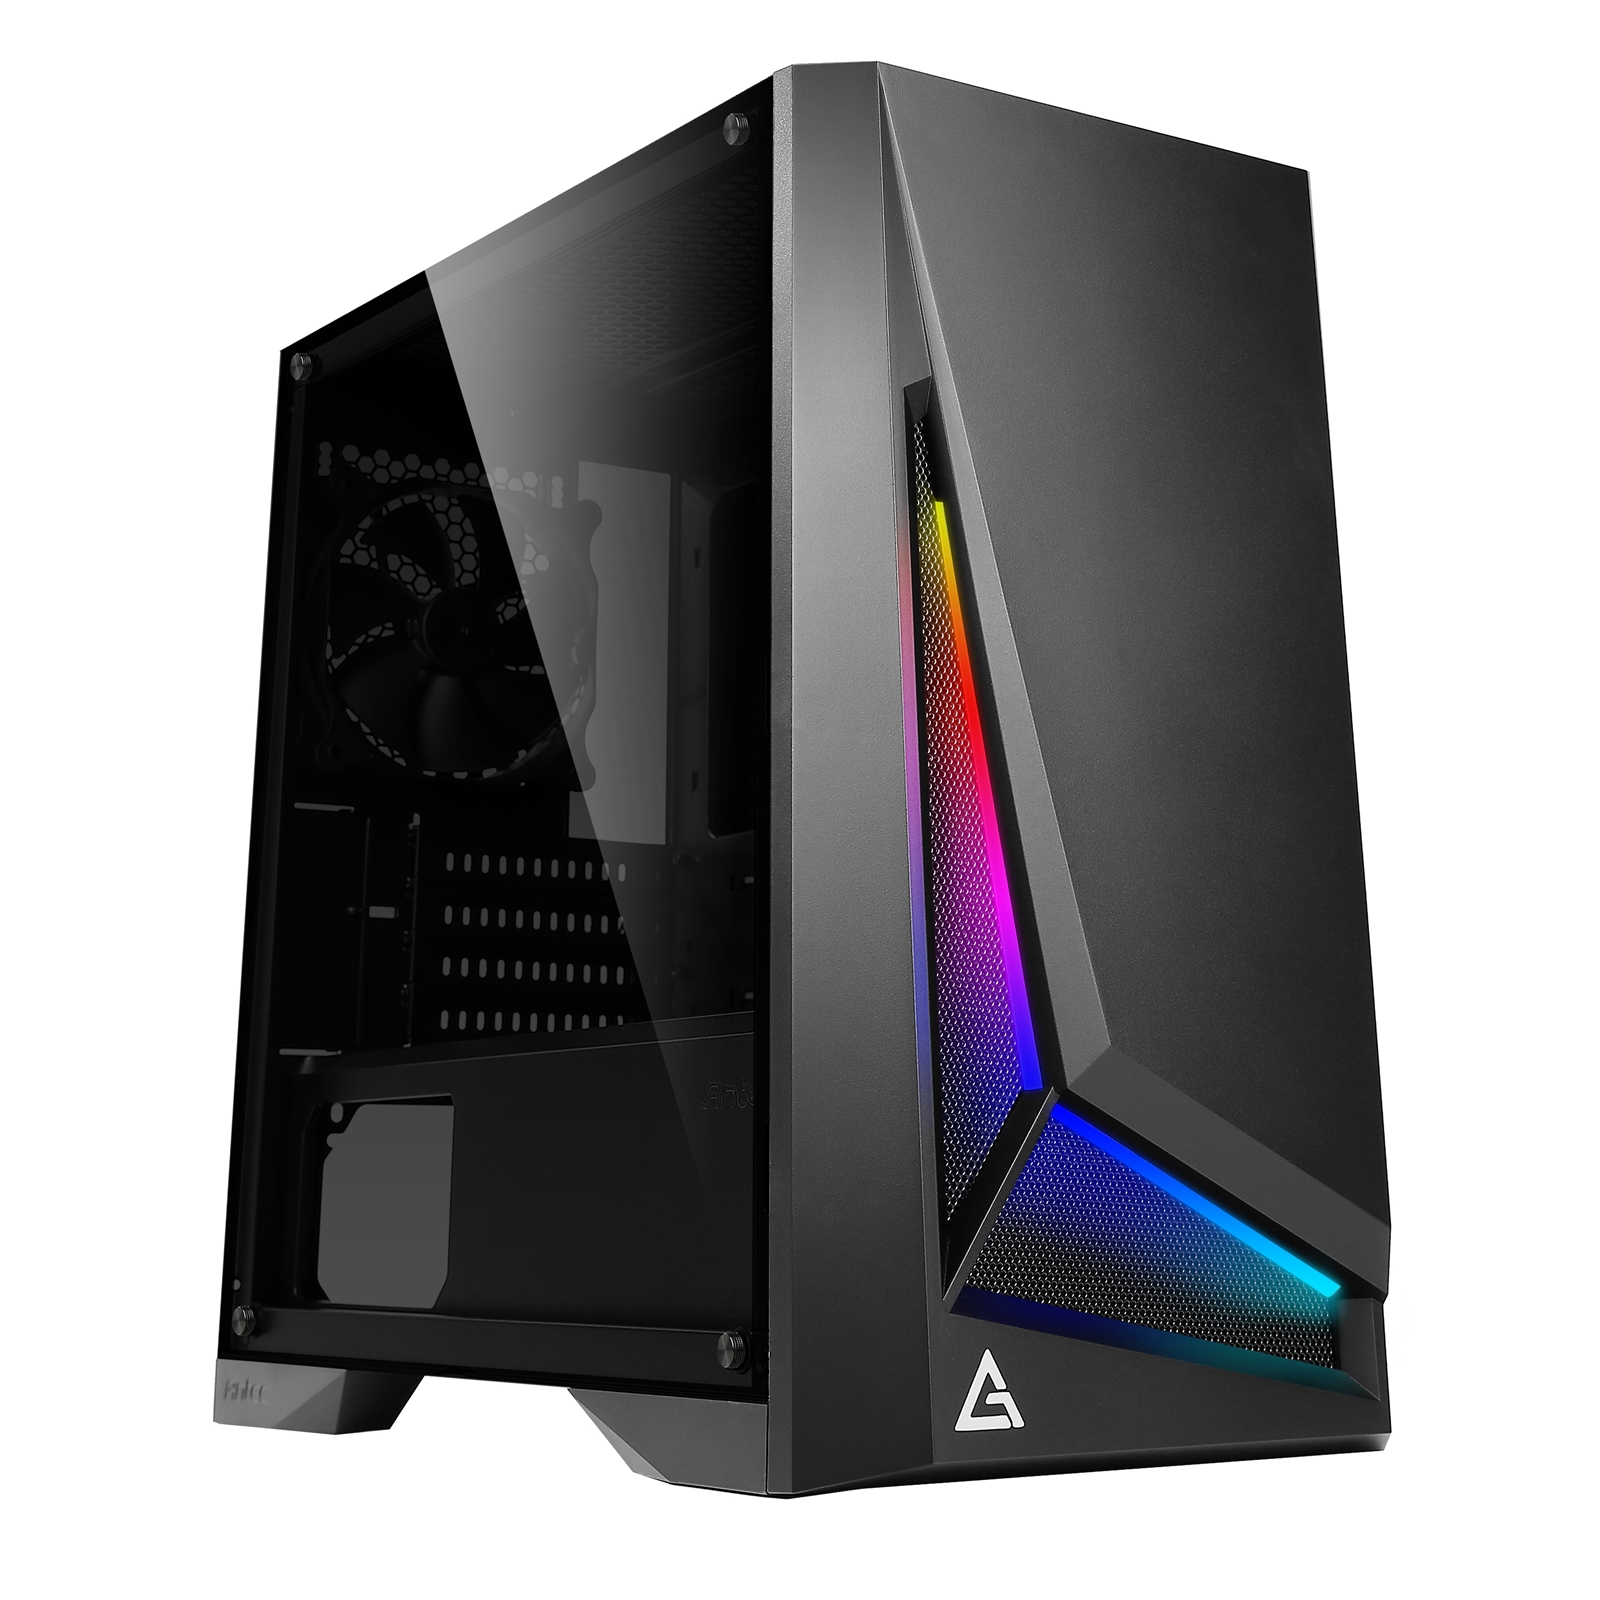 ANTEC DP301M Case, Gaming, Black, Micro Tower, 2 x USB 3.0, Tempered Glass Side Window Panel, Addressable RGB LED Lighting, Micro ATX, Mini-ITX